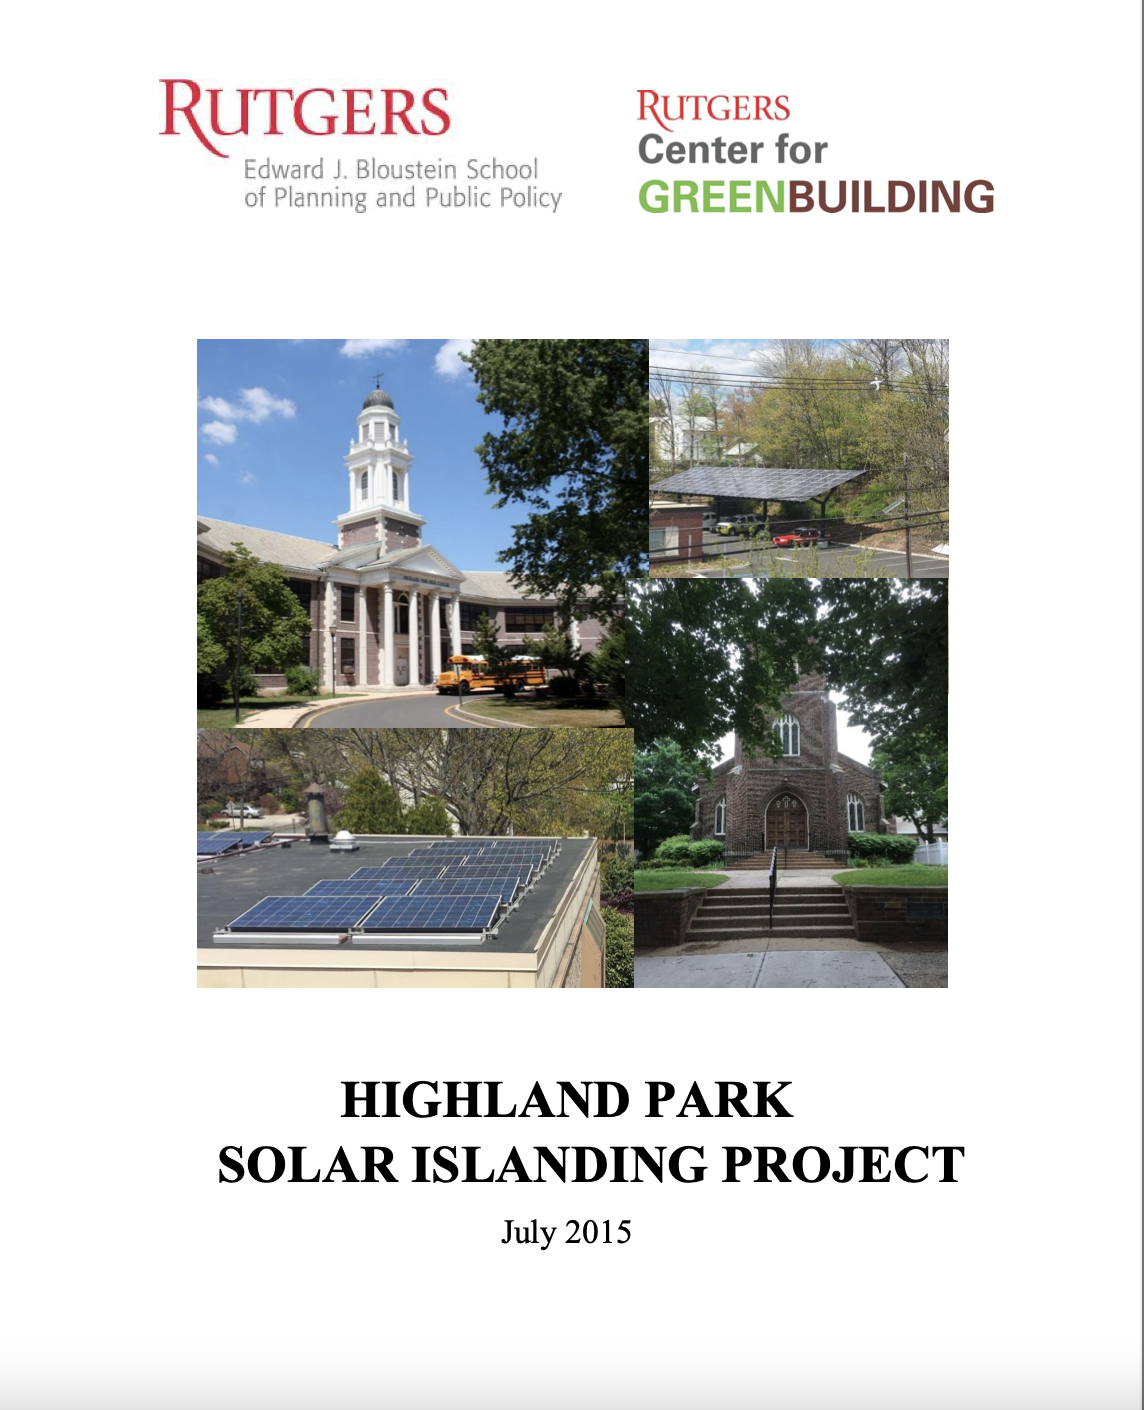 Highland Park Solar Islanding Project